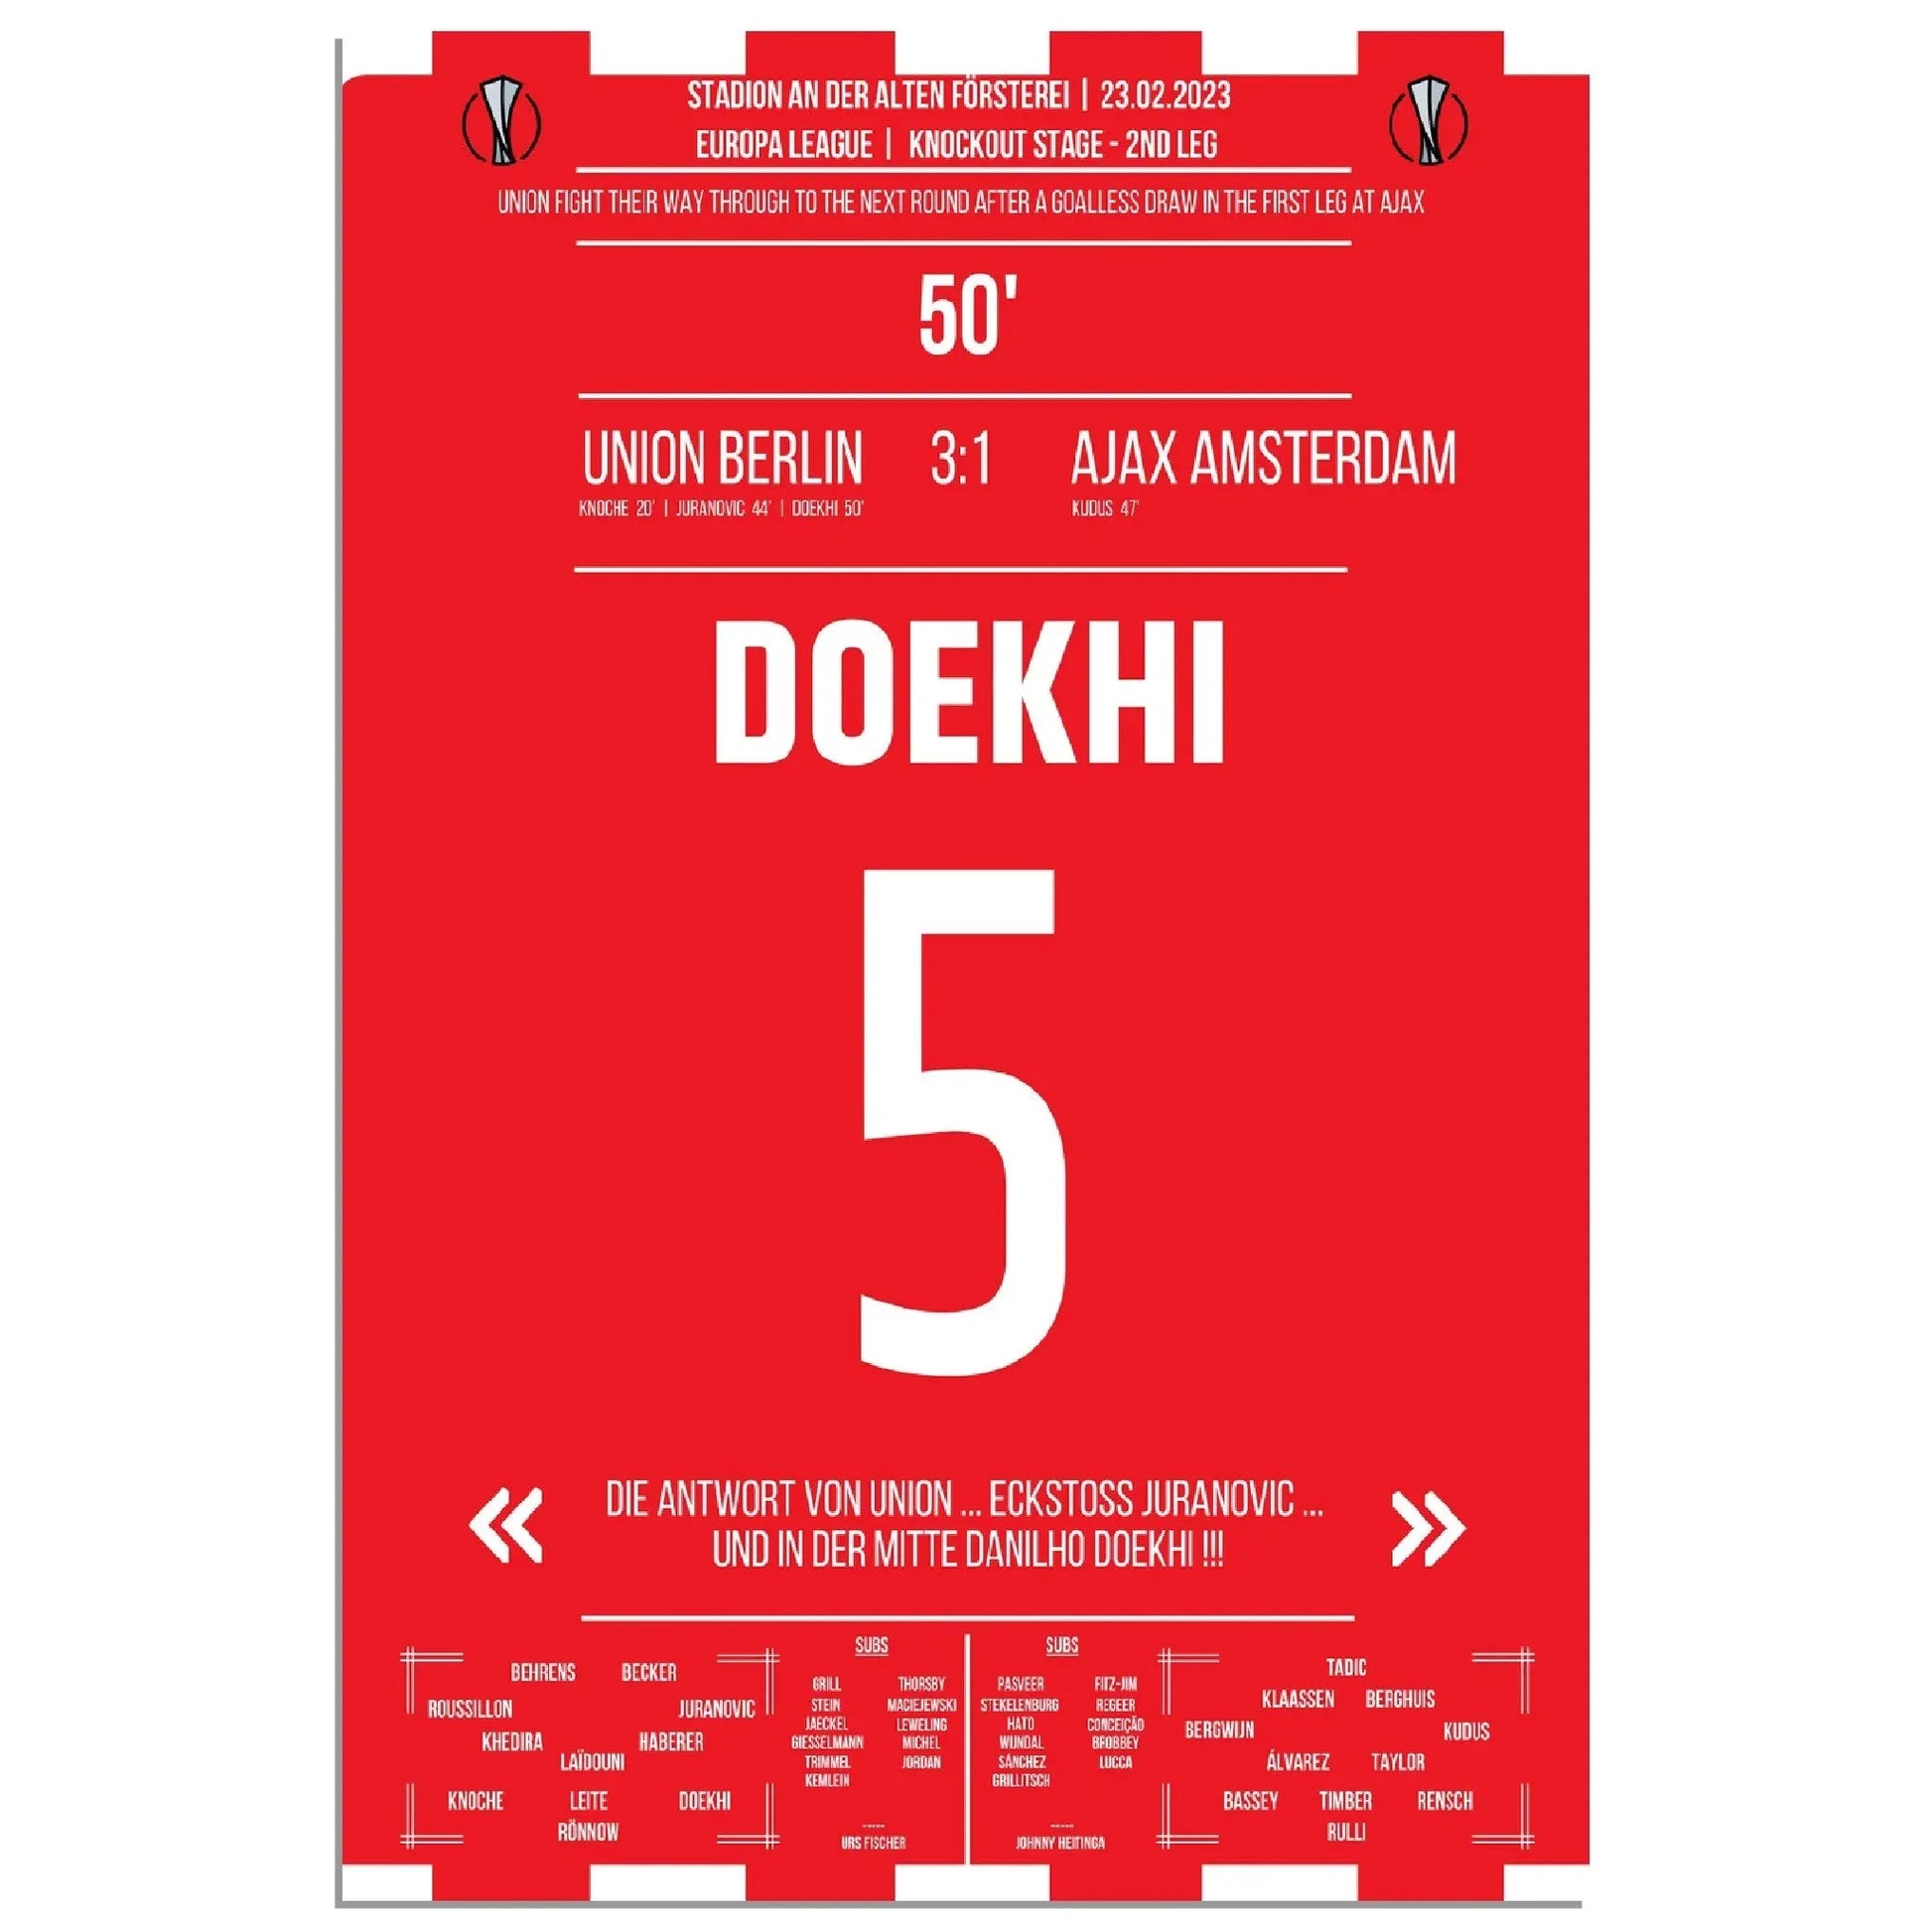 Doekhi trifft zum Einzug ins Europa League Achtelfinale 